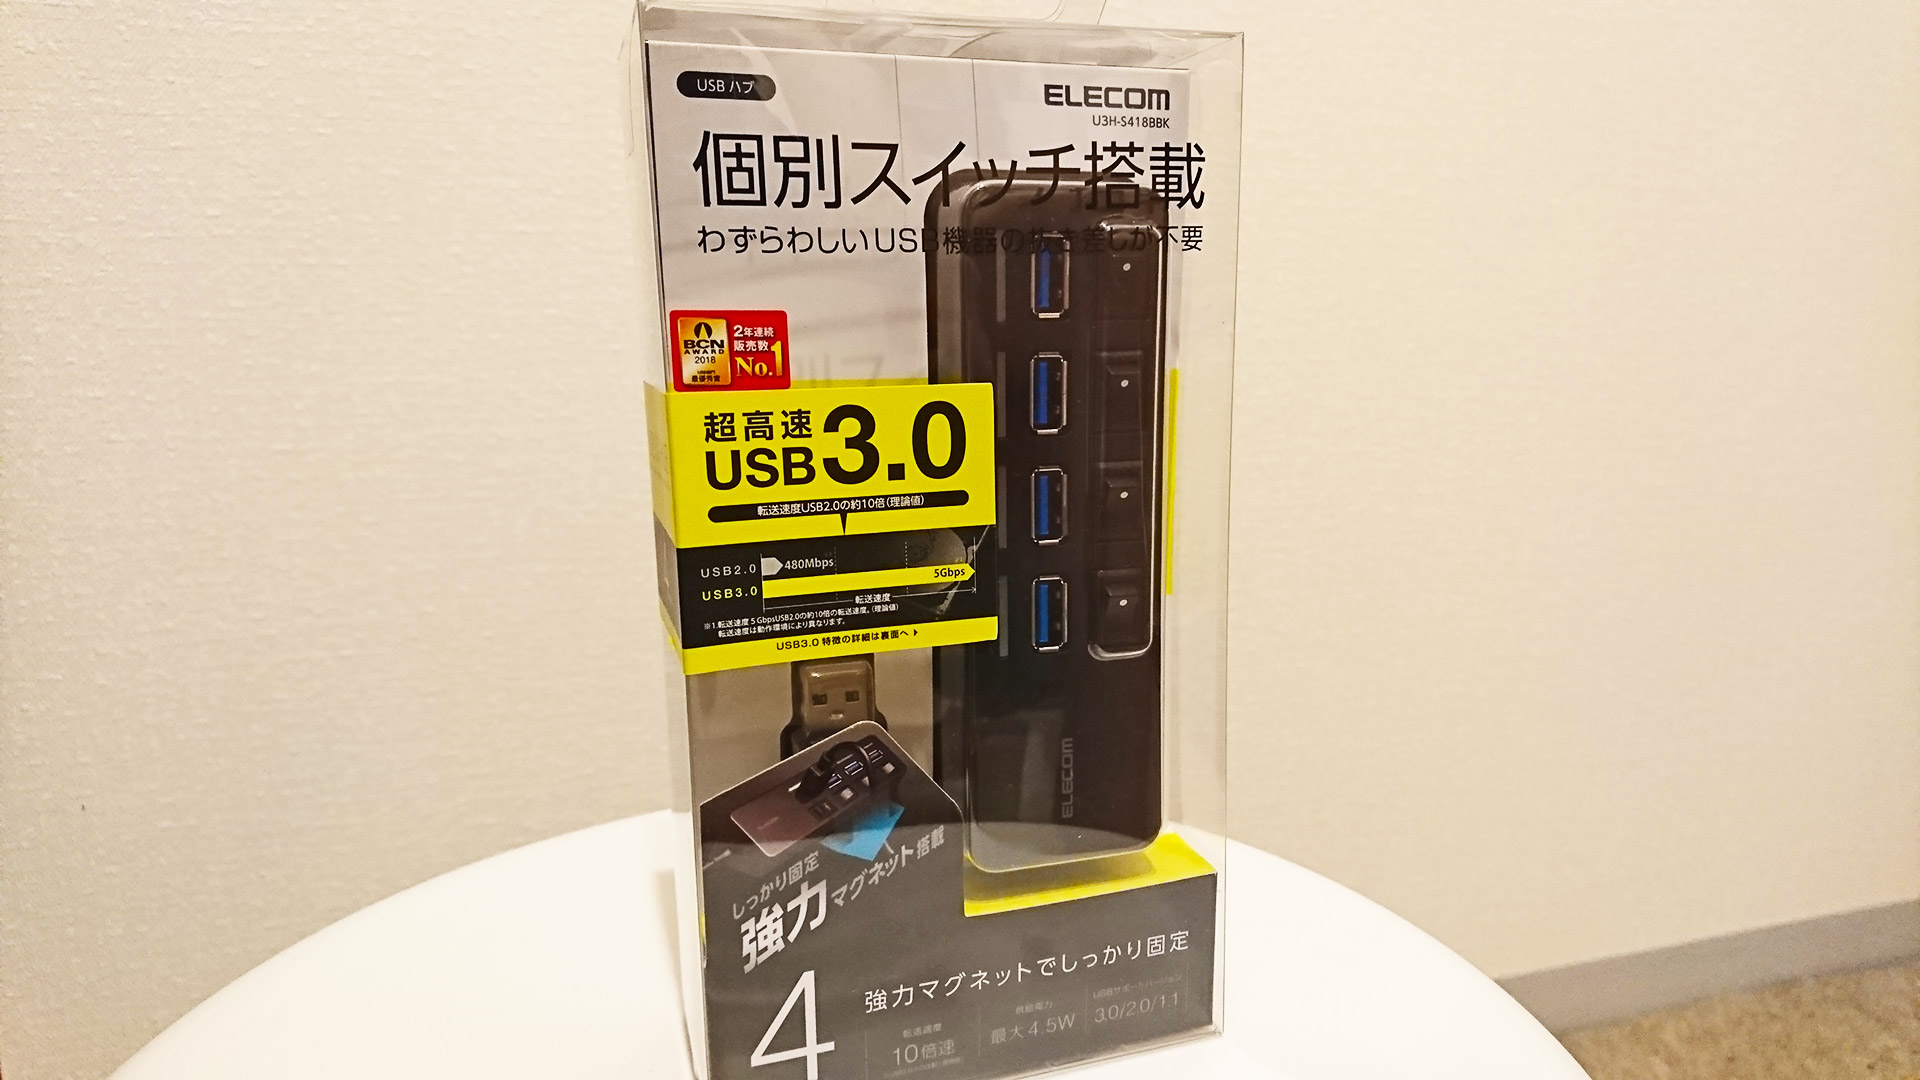 USB3.0 HUBを増設【ELECOM U3H-S418BBK】 | PC関連 | Reeazy[リィジィ]